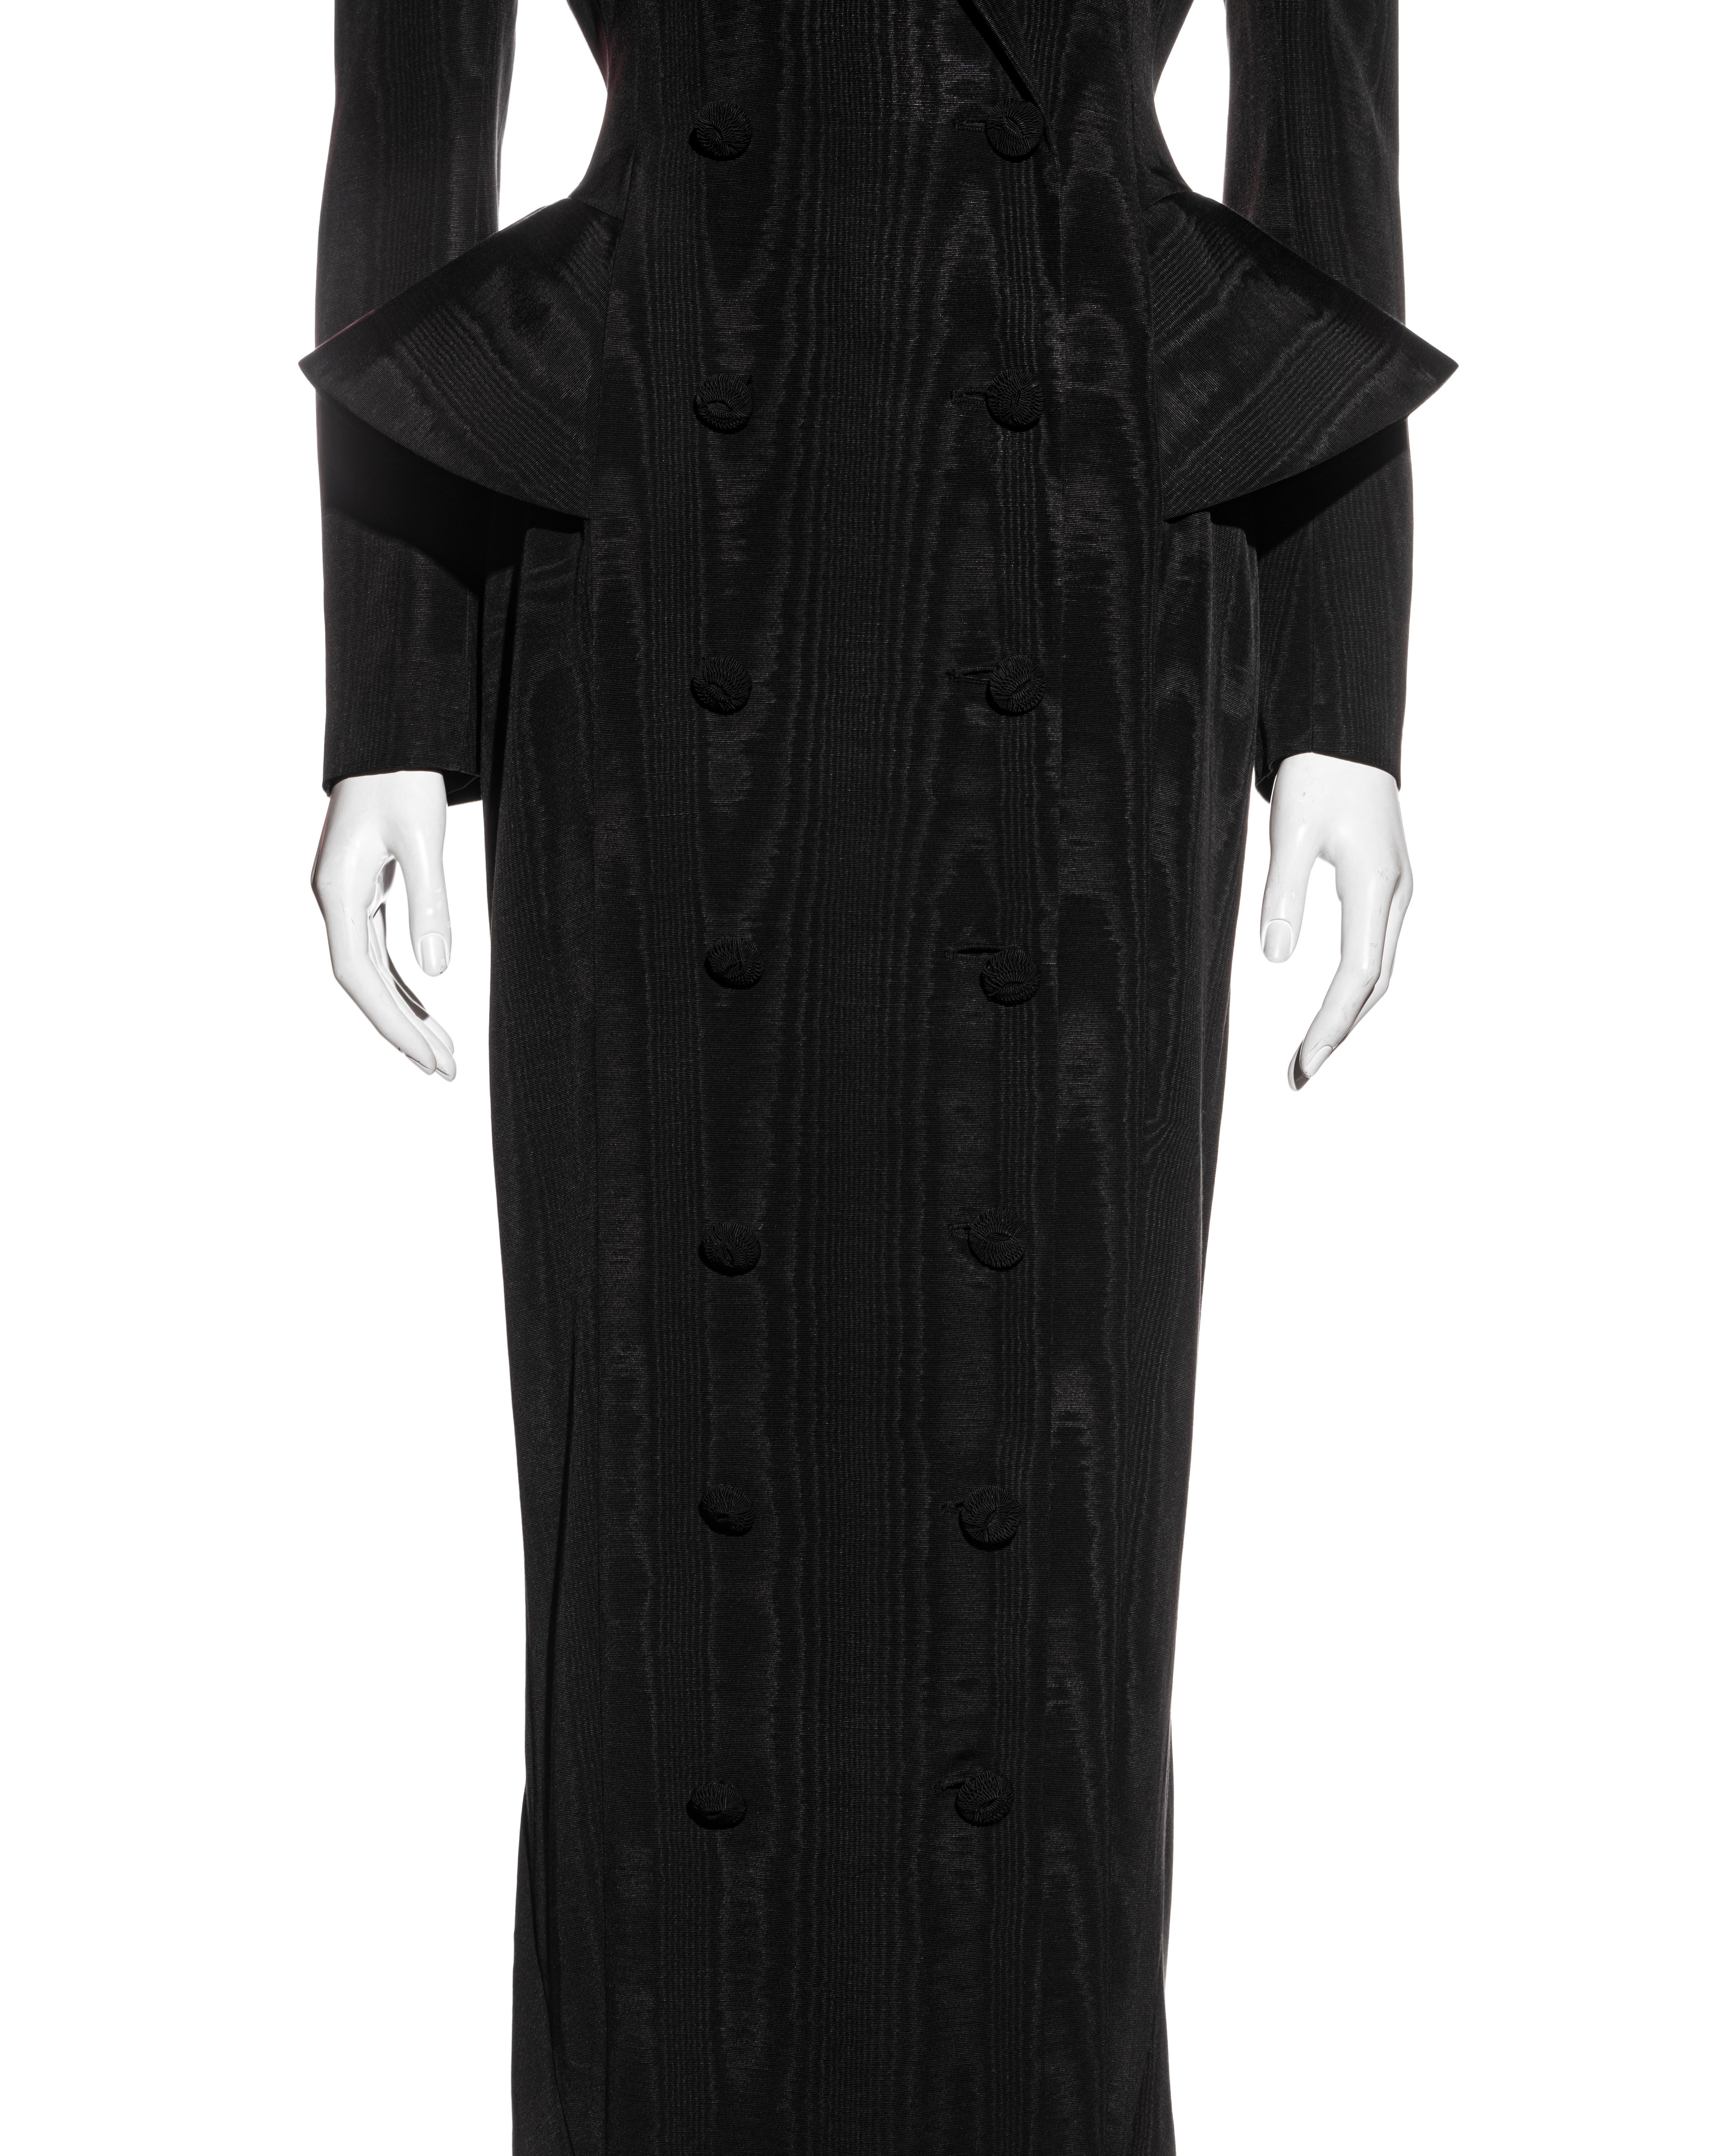 Women's John Galliano black moiré showpiece double-breasted dress coat, ss 1995